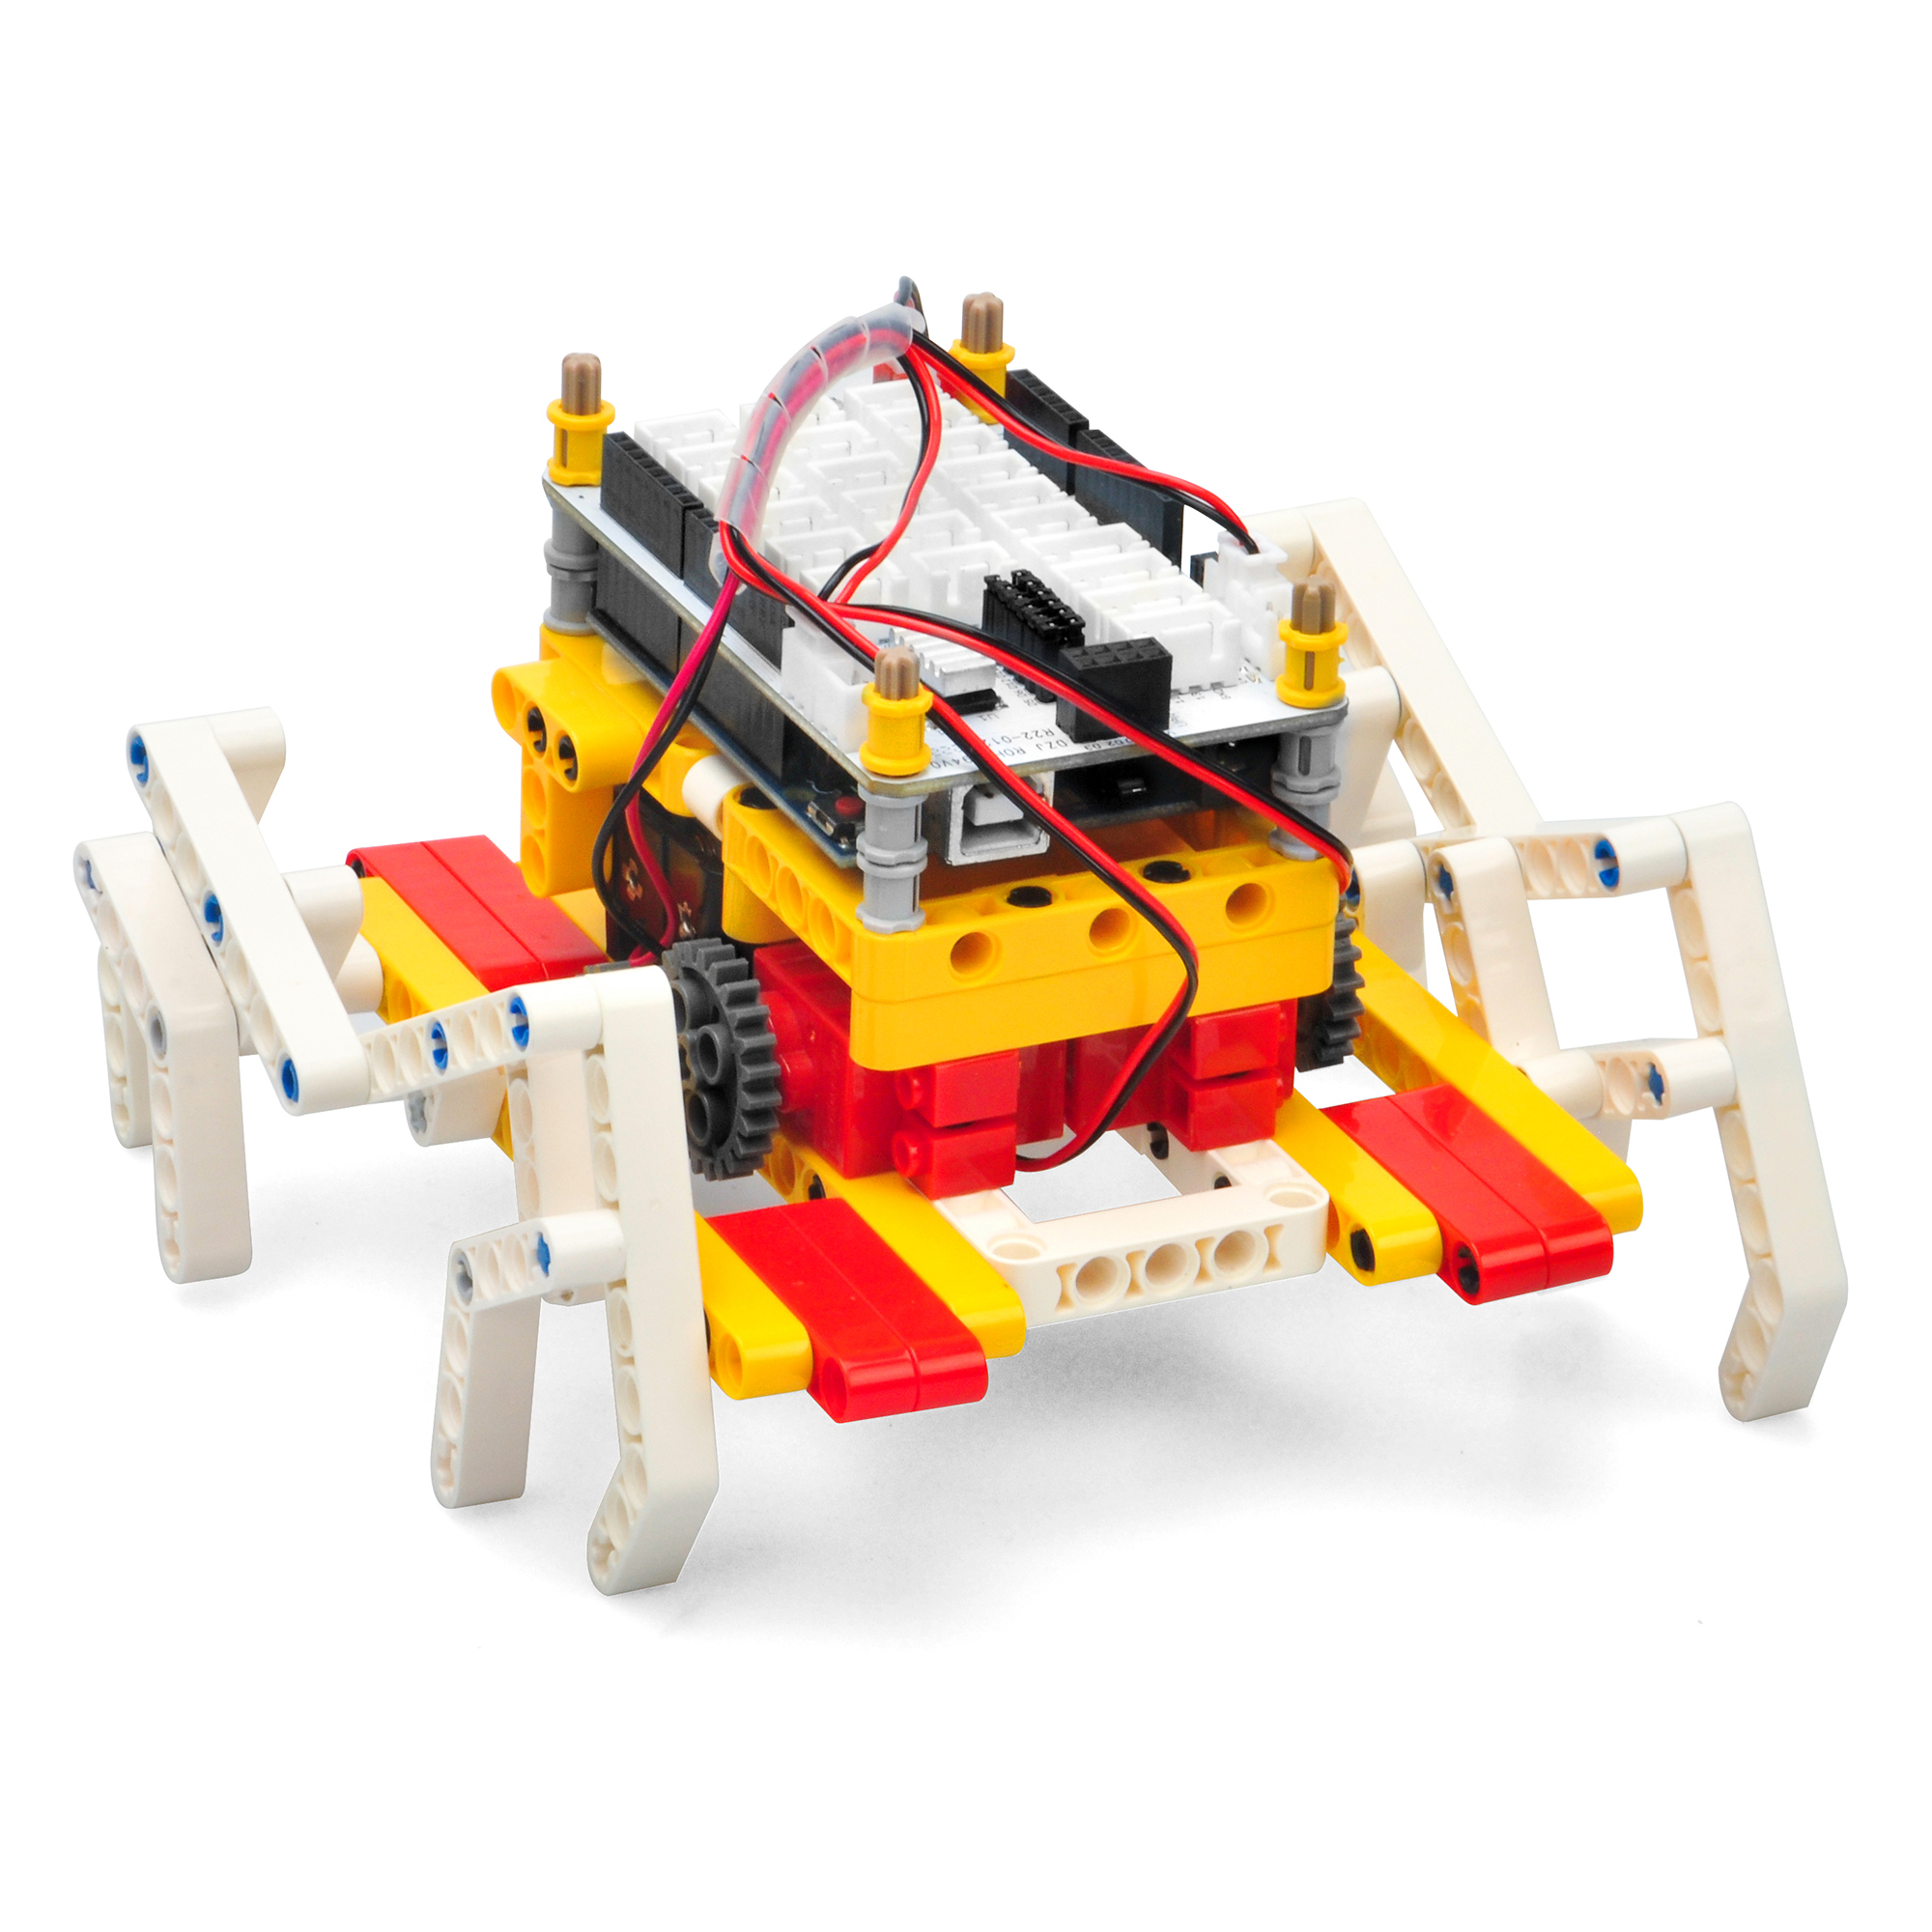 OSOYOO Building Block Robot Car Leçon 8: Araignée qui marche